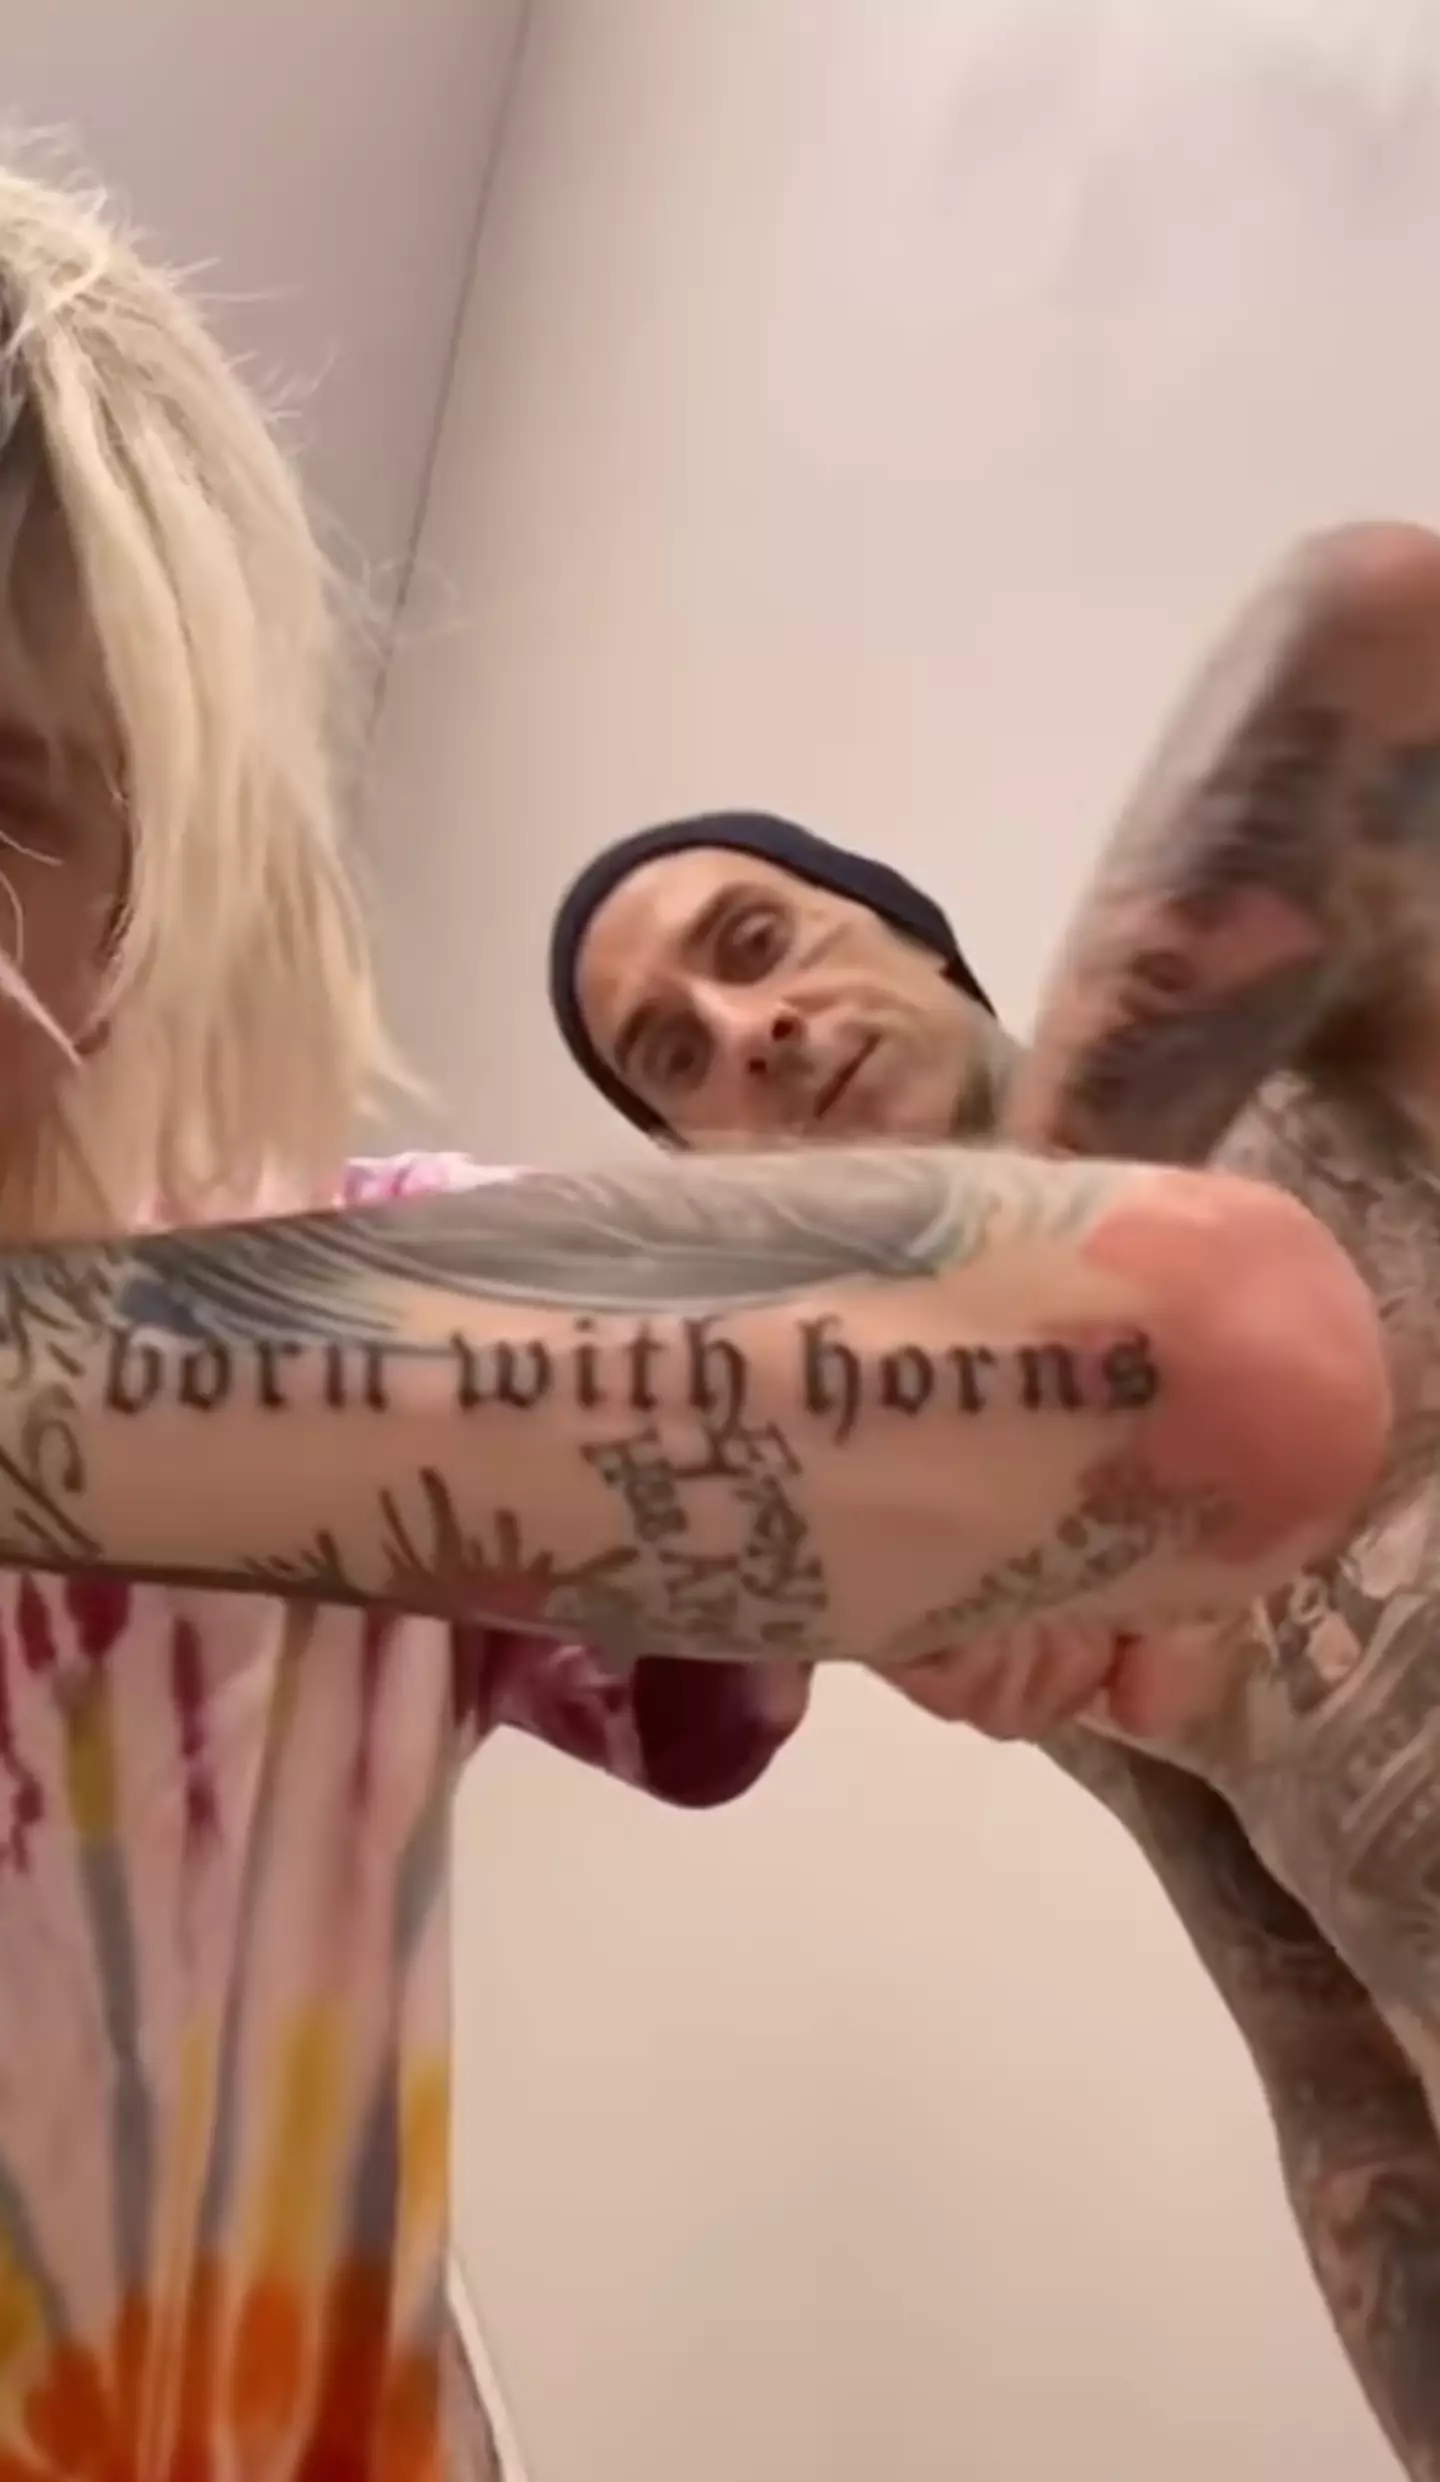 Born With Horns tattoo (@machinegunkelly/Instagram)